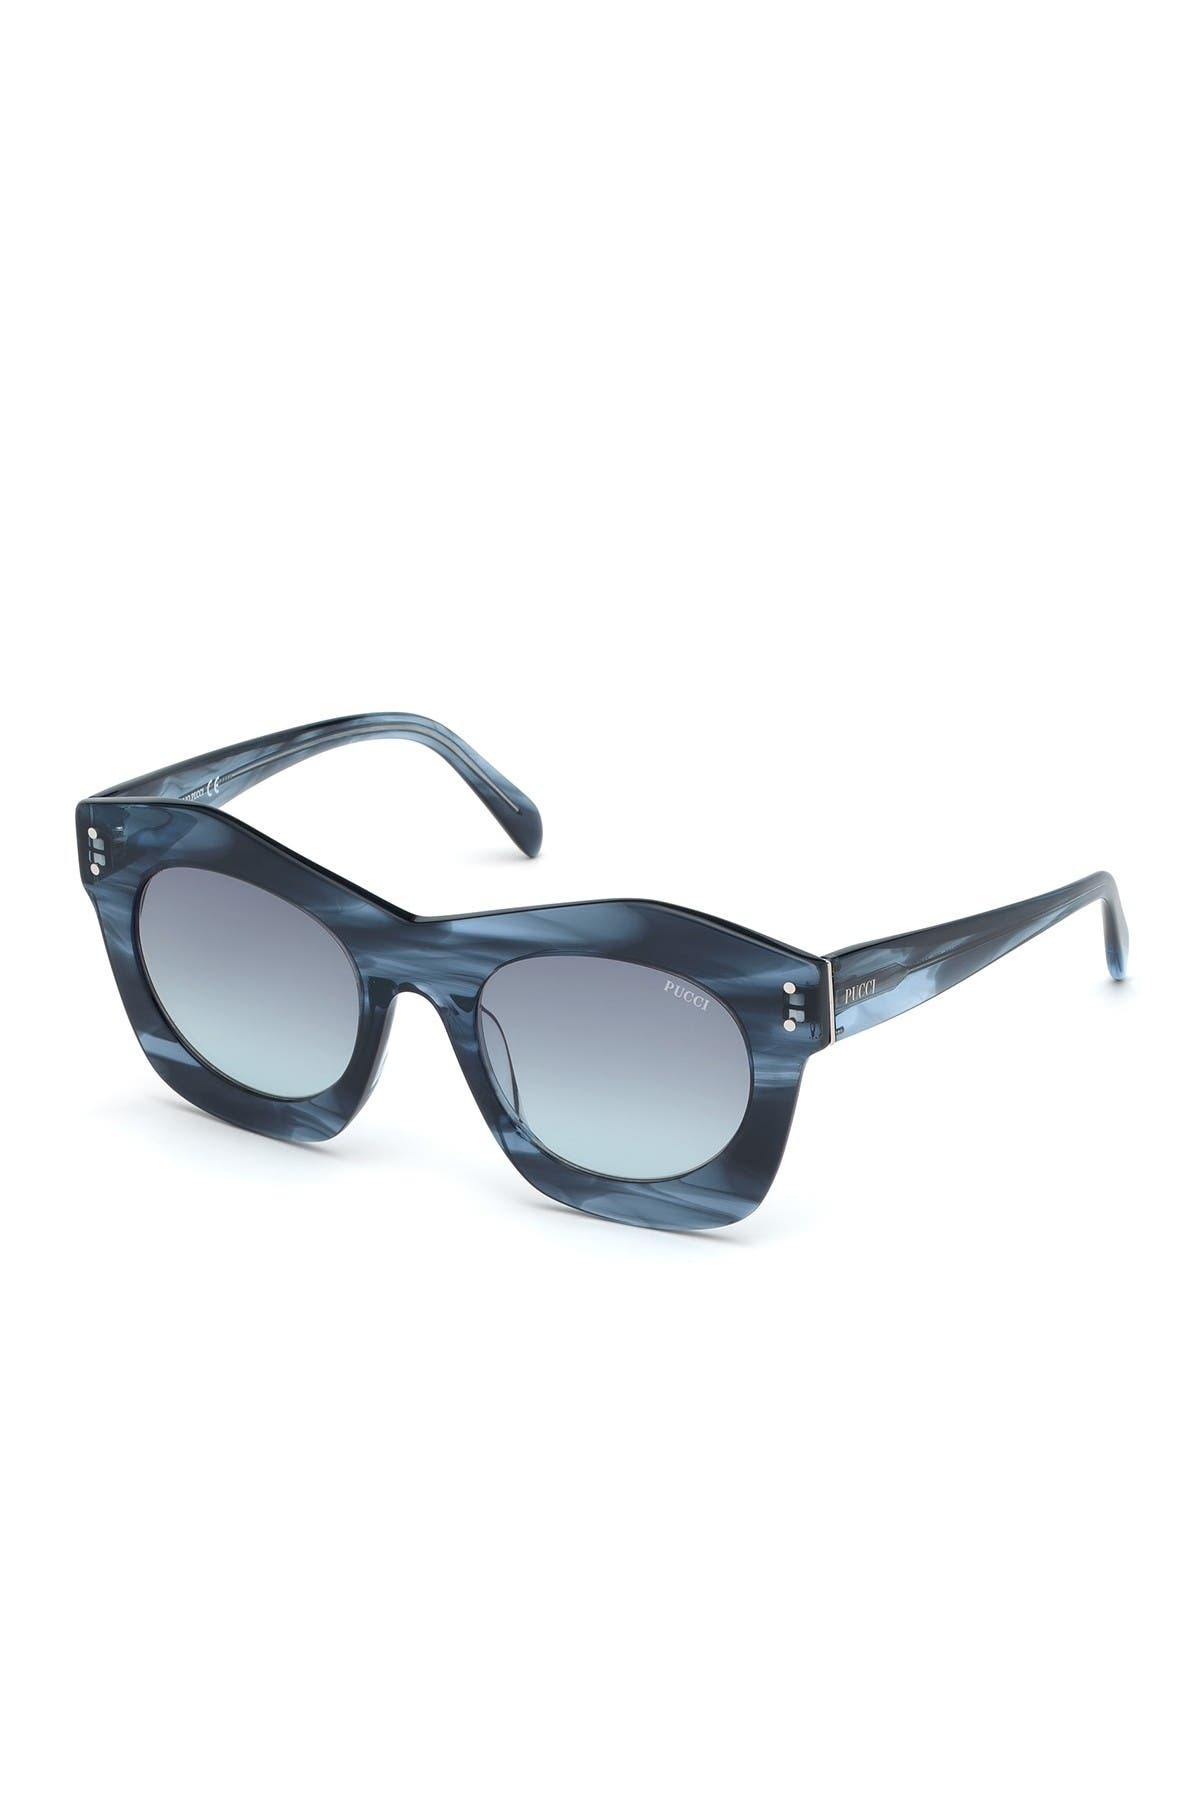 Emilio Pucci 51mm Geometric Sunglasses In Bluo/smkg